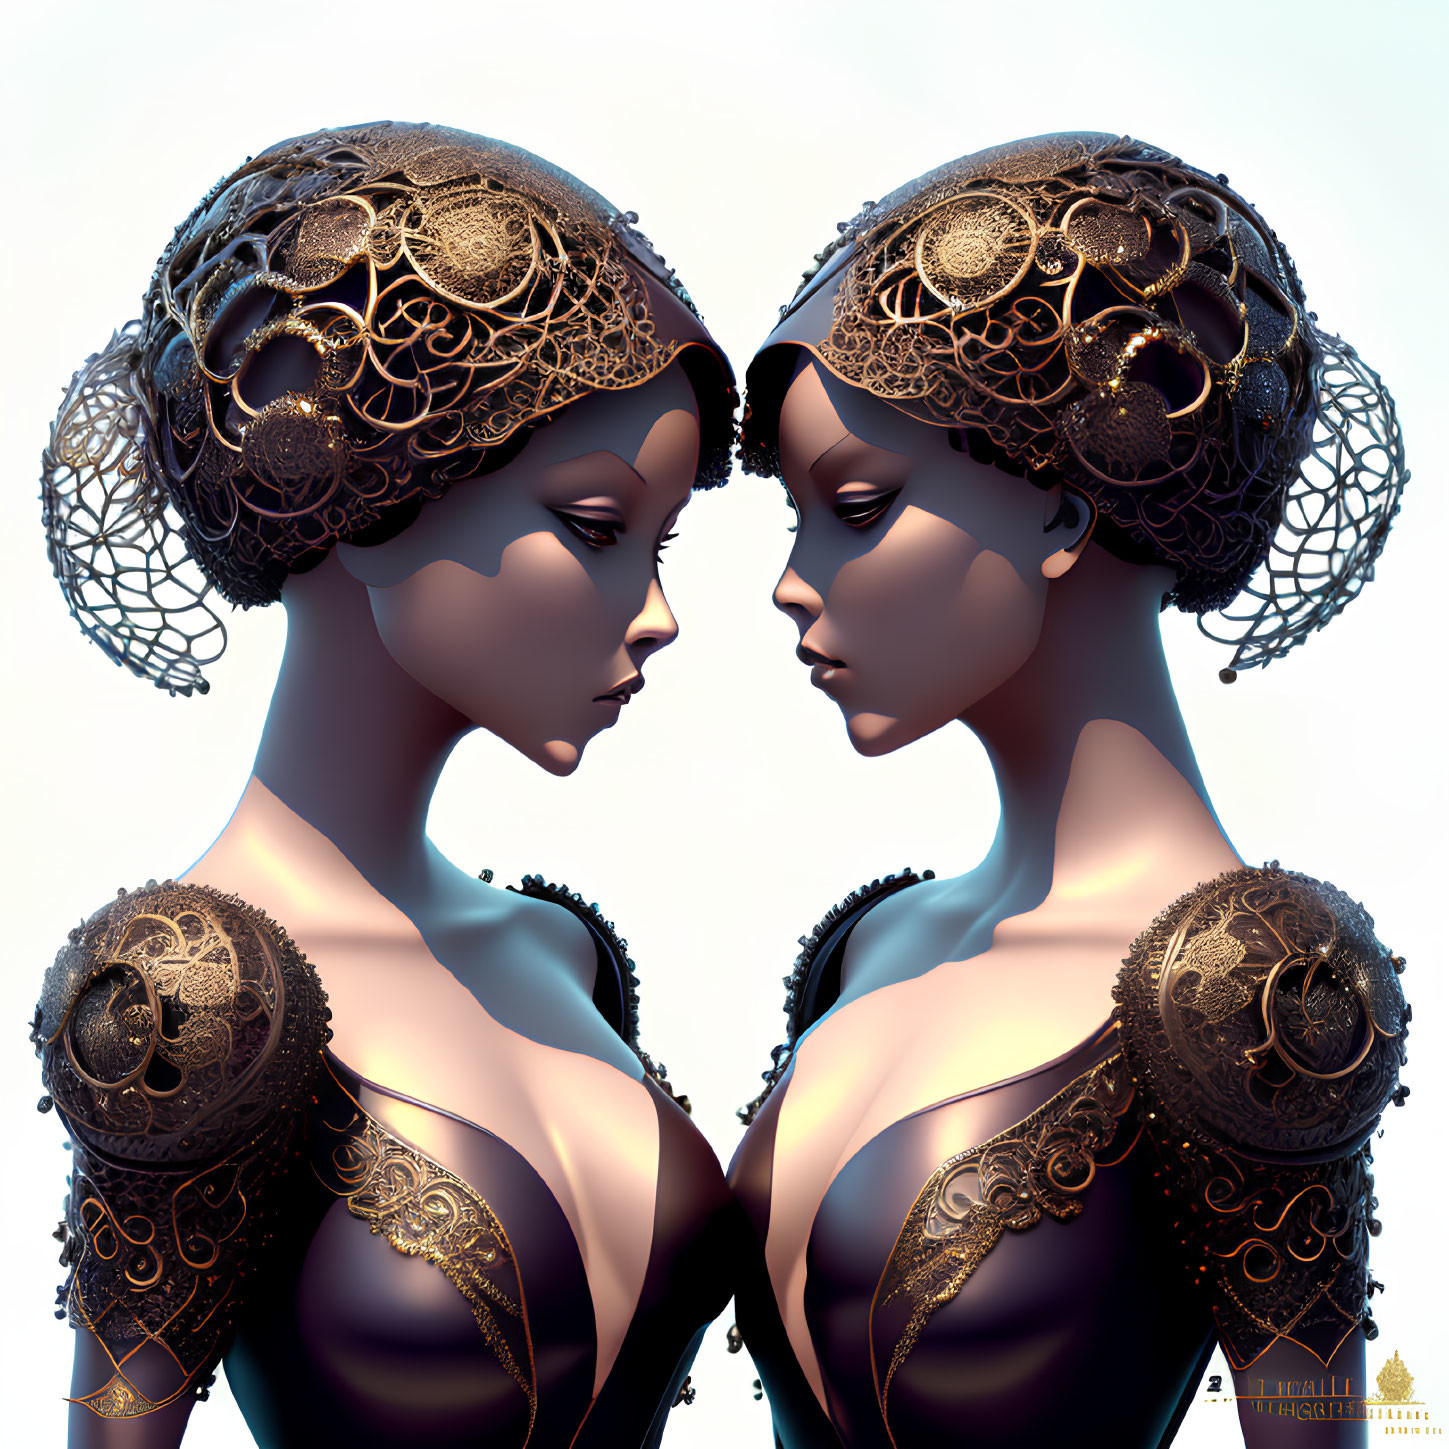 Symmetrical digital artwork of two women with ornate headdresses and shoulder embellishments